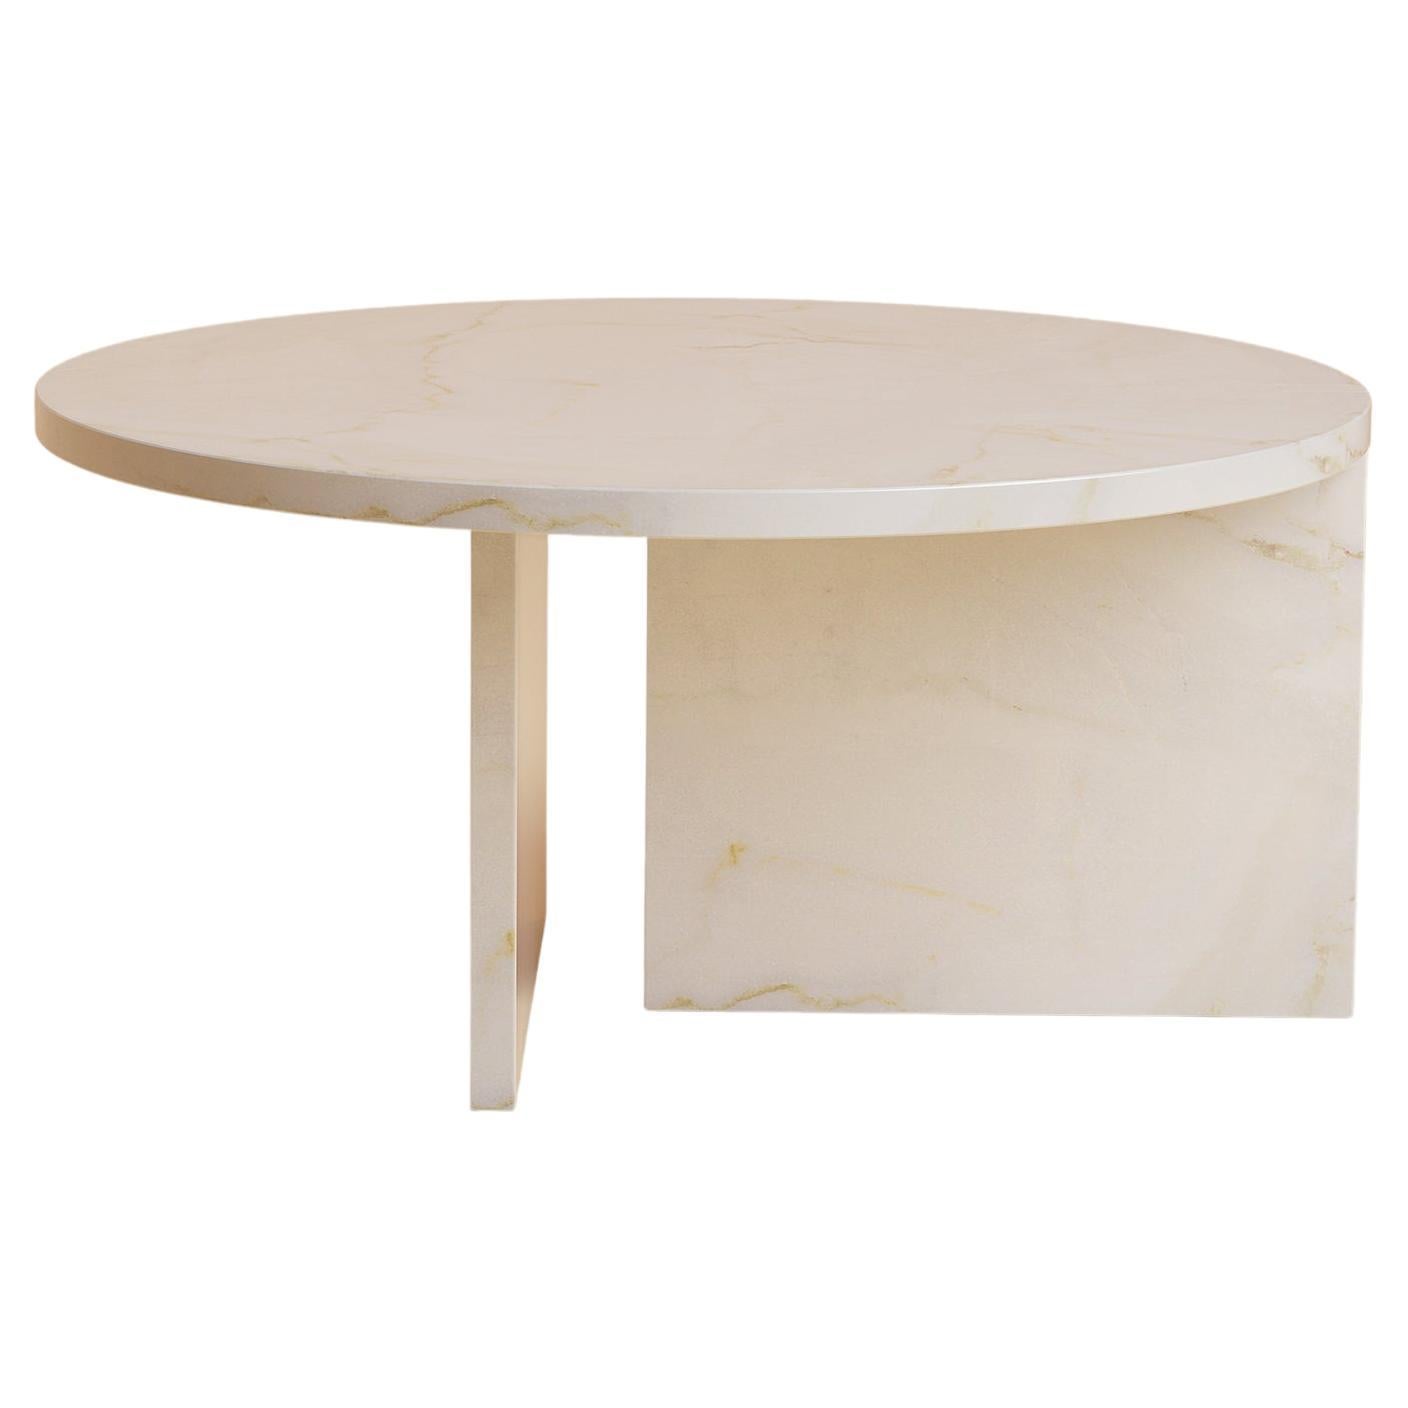 Table basse ronde Calacatta en marbre doré, fabriquée en Italie